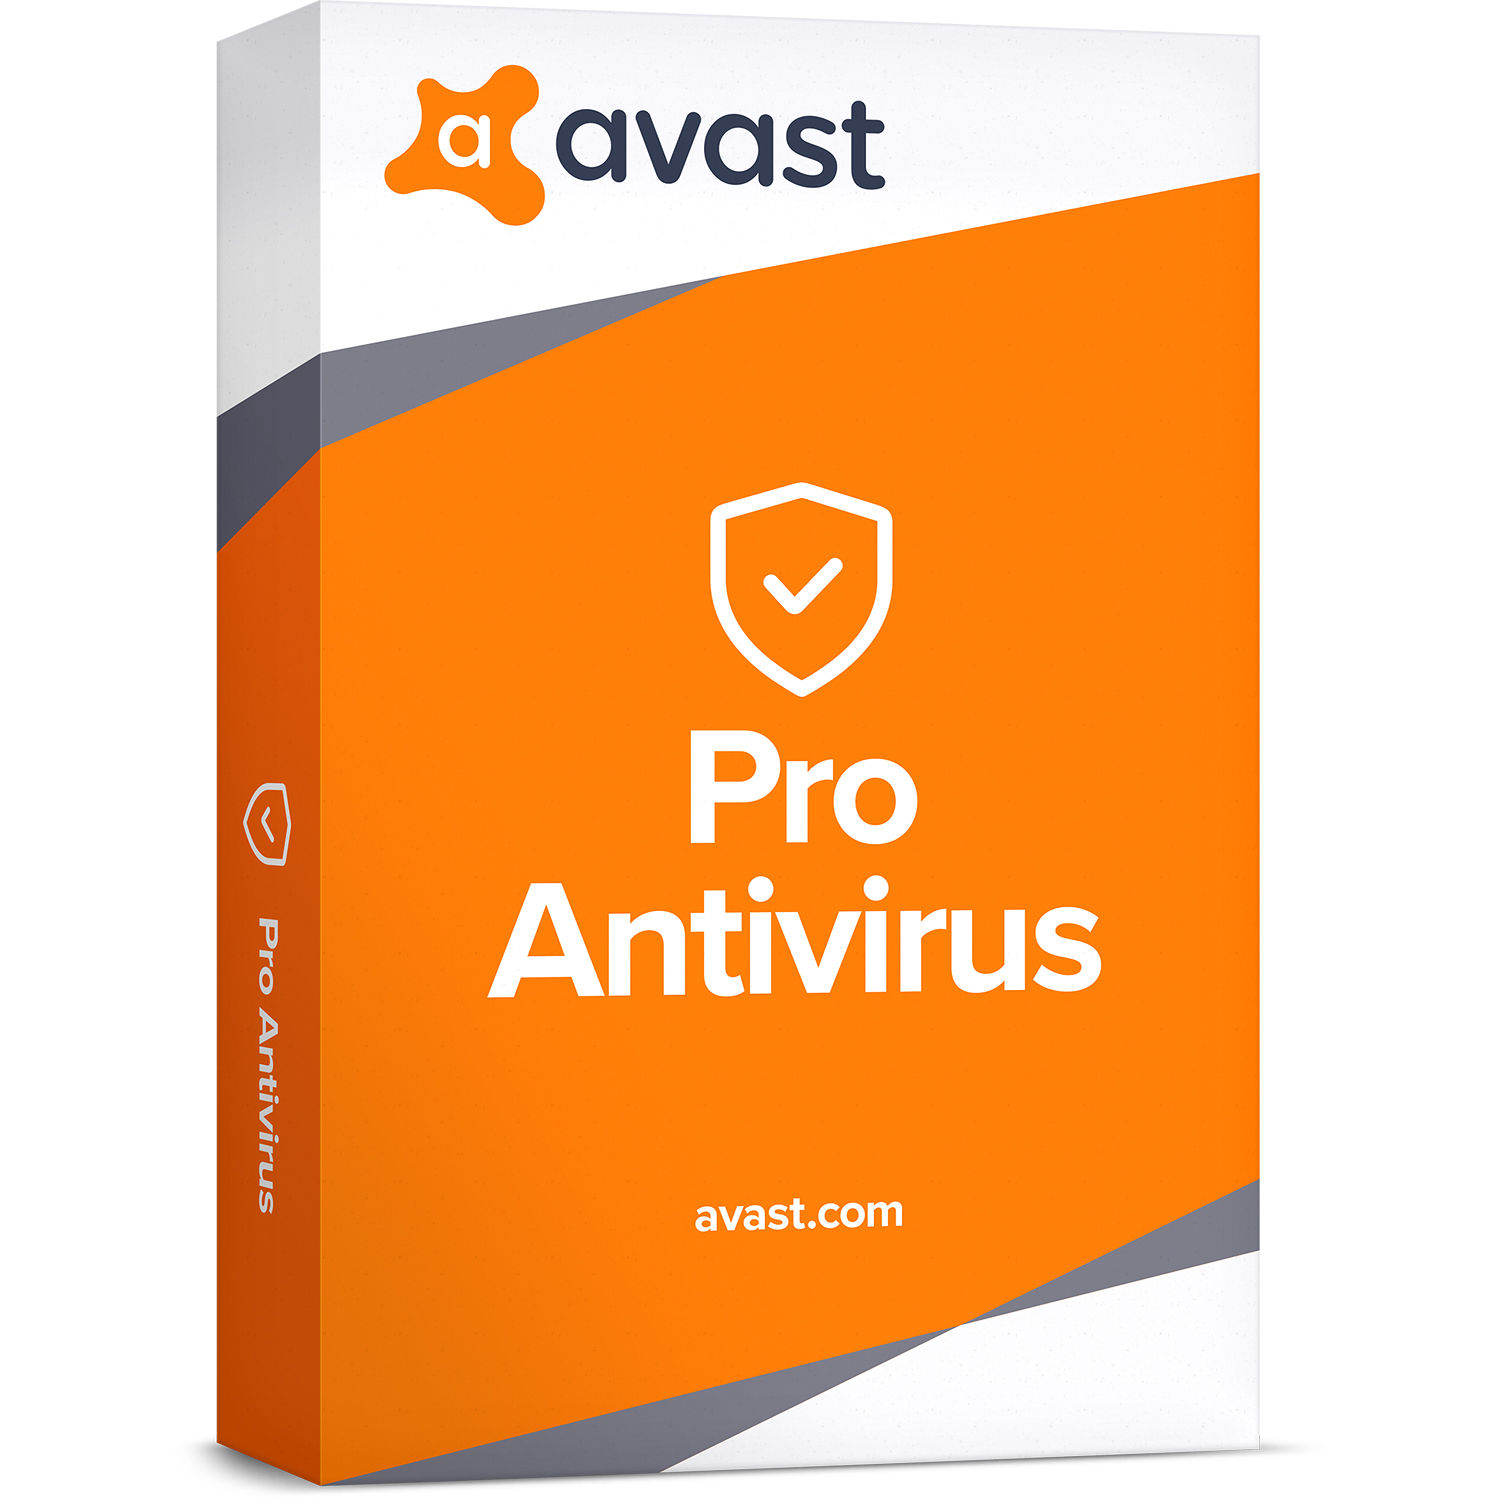 avast antivirus 2016 free download for mac